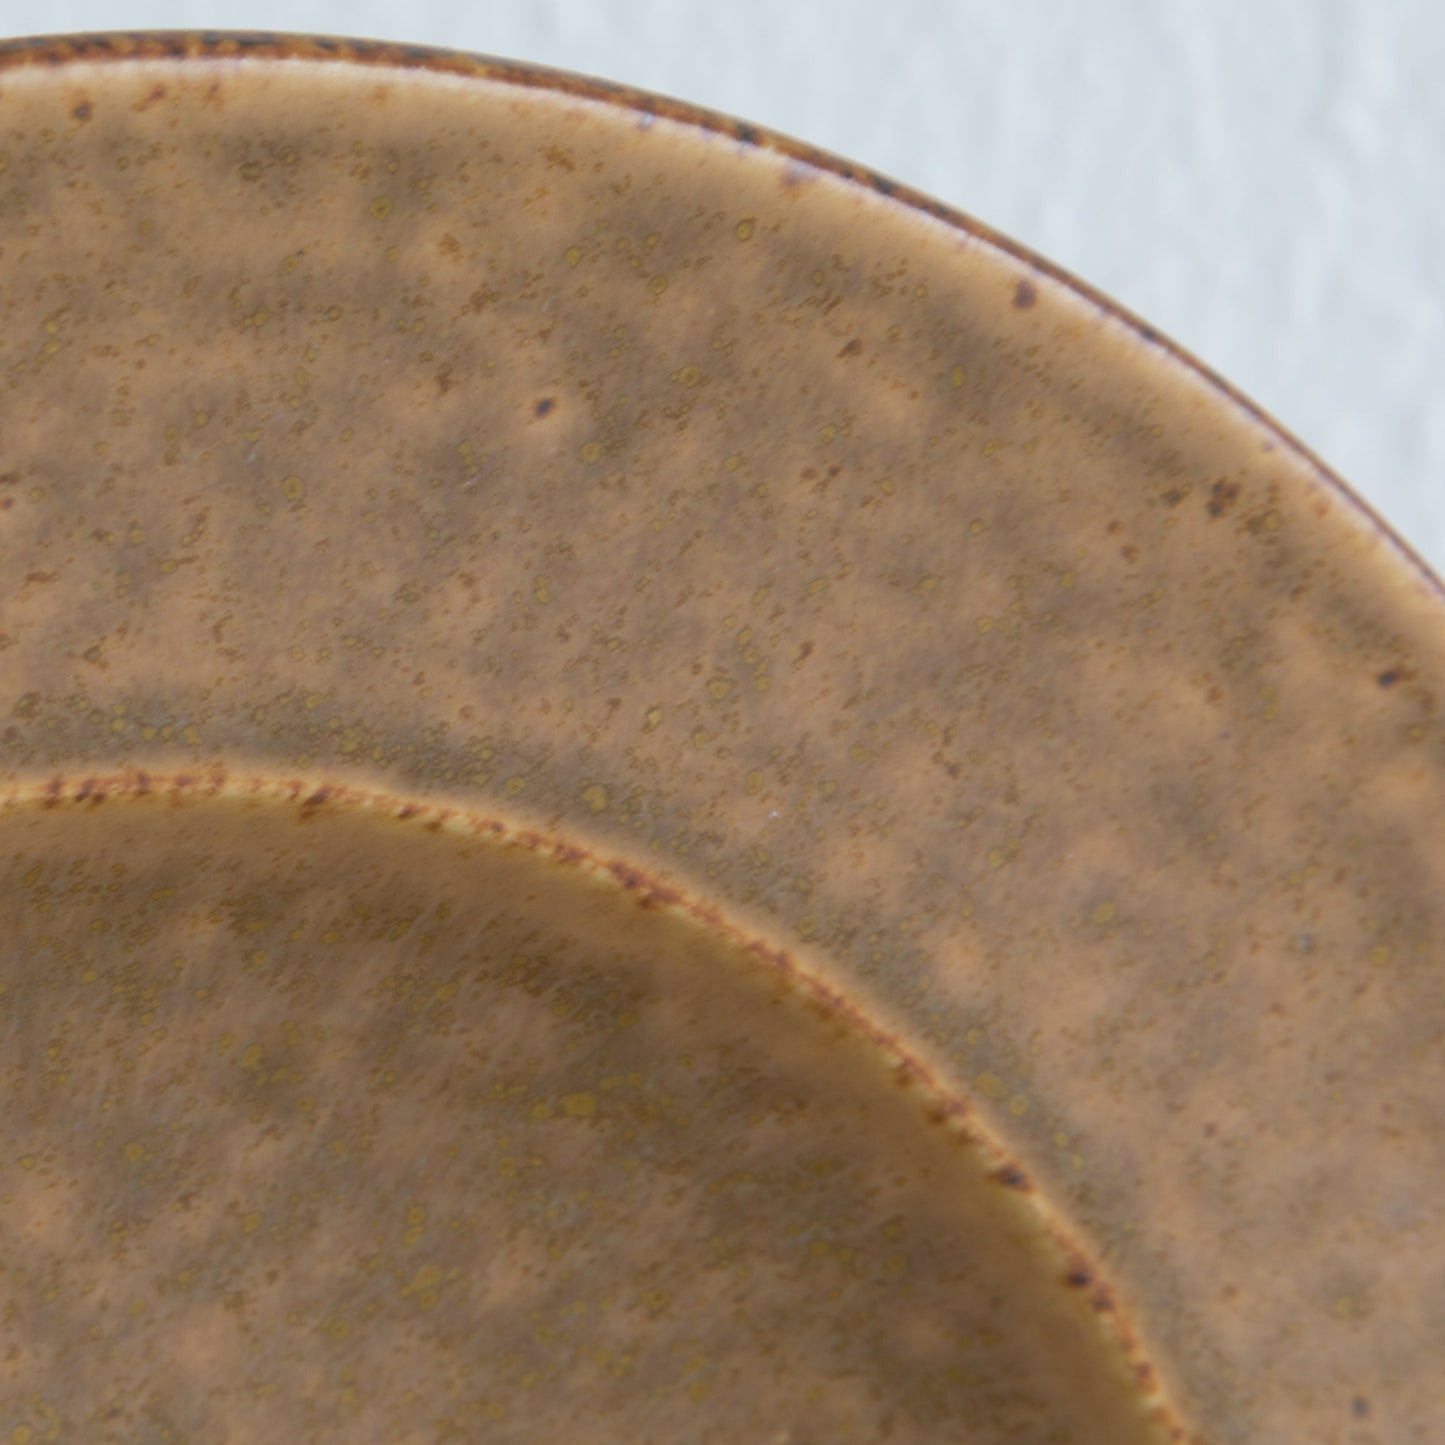 PER LINNEMANN SCHMIDT Palshus Unique Caramel Brown Speckled Glazed Stoneware Bowl Mollaris.com 